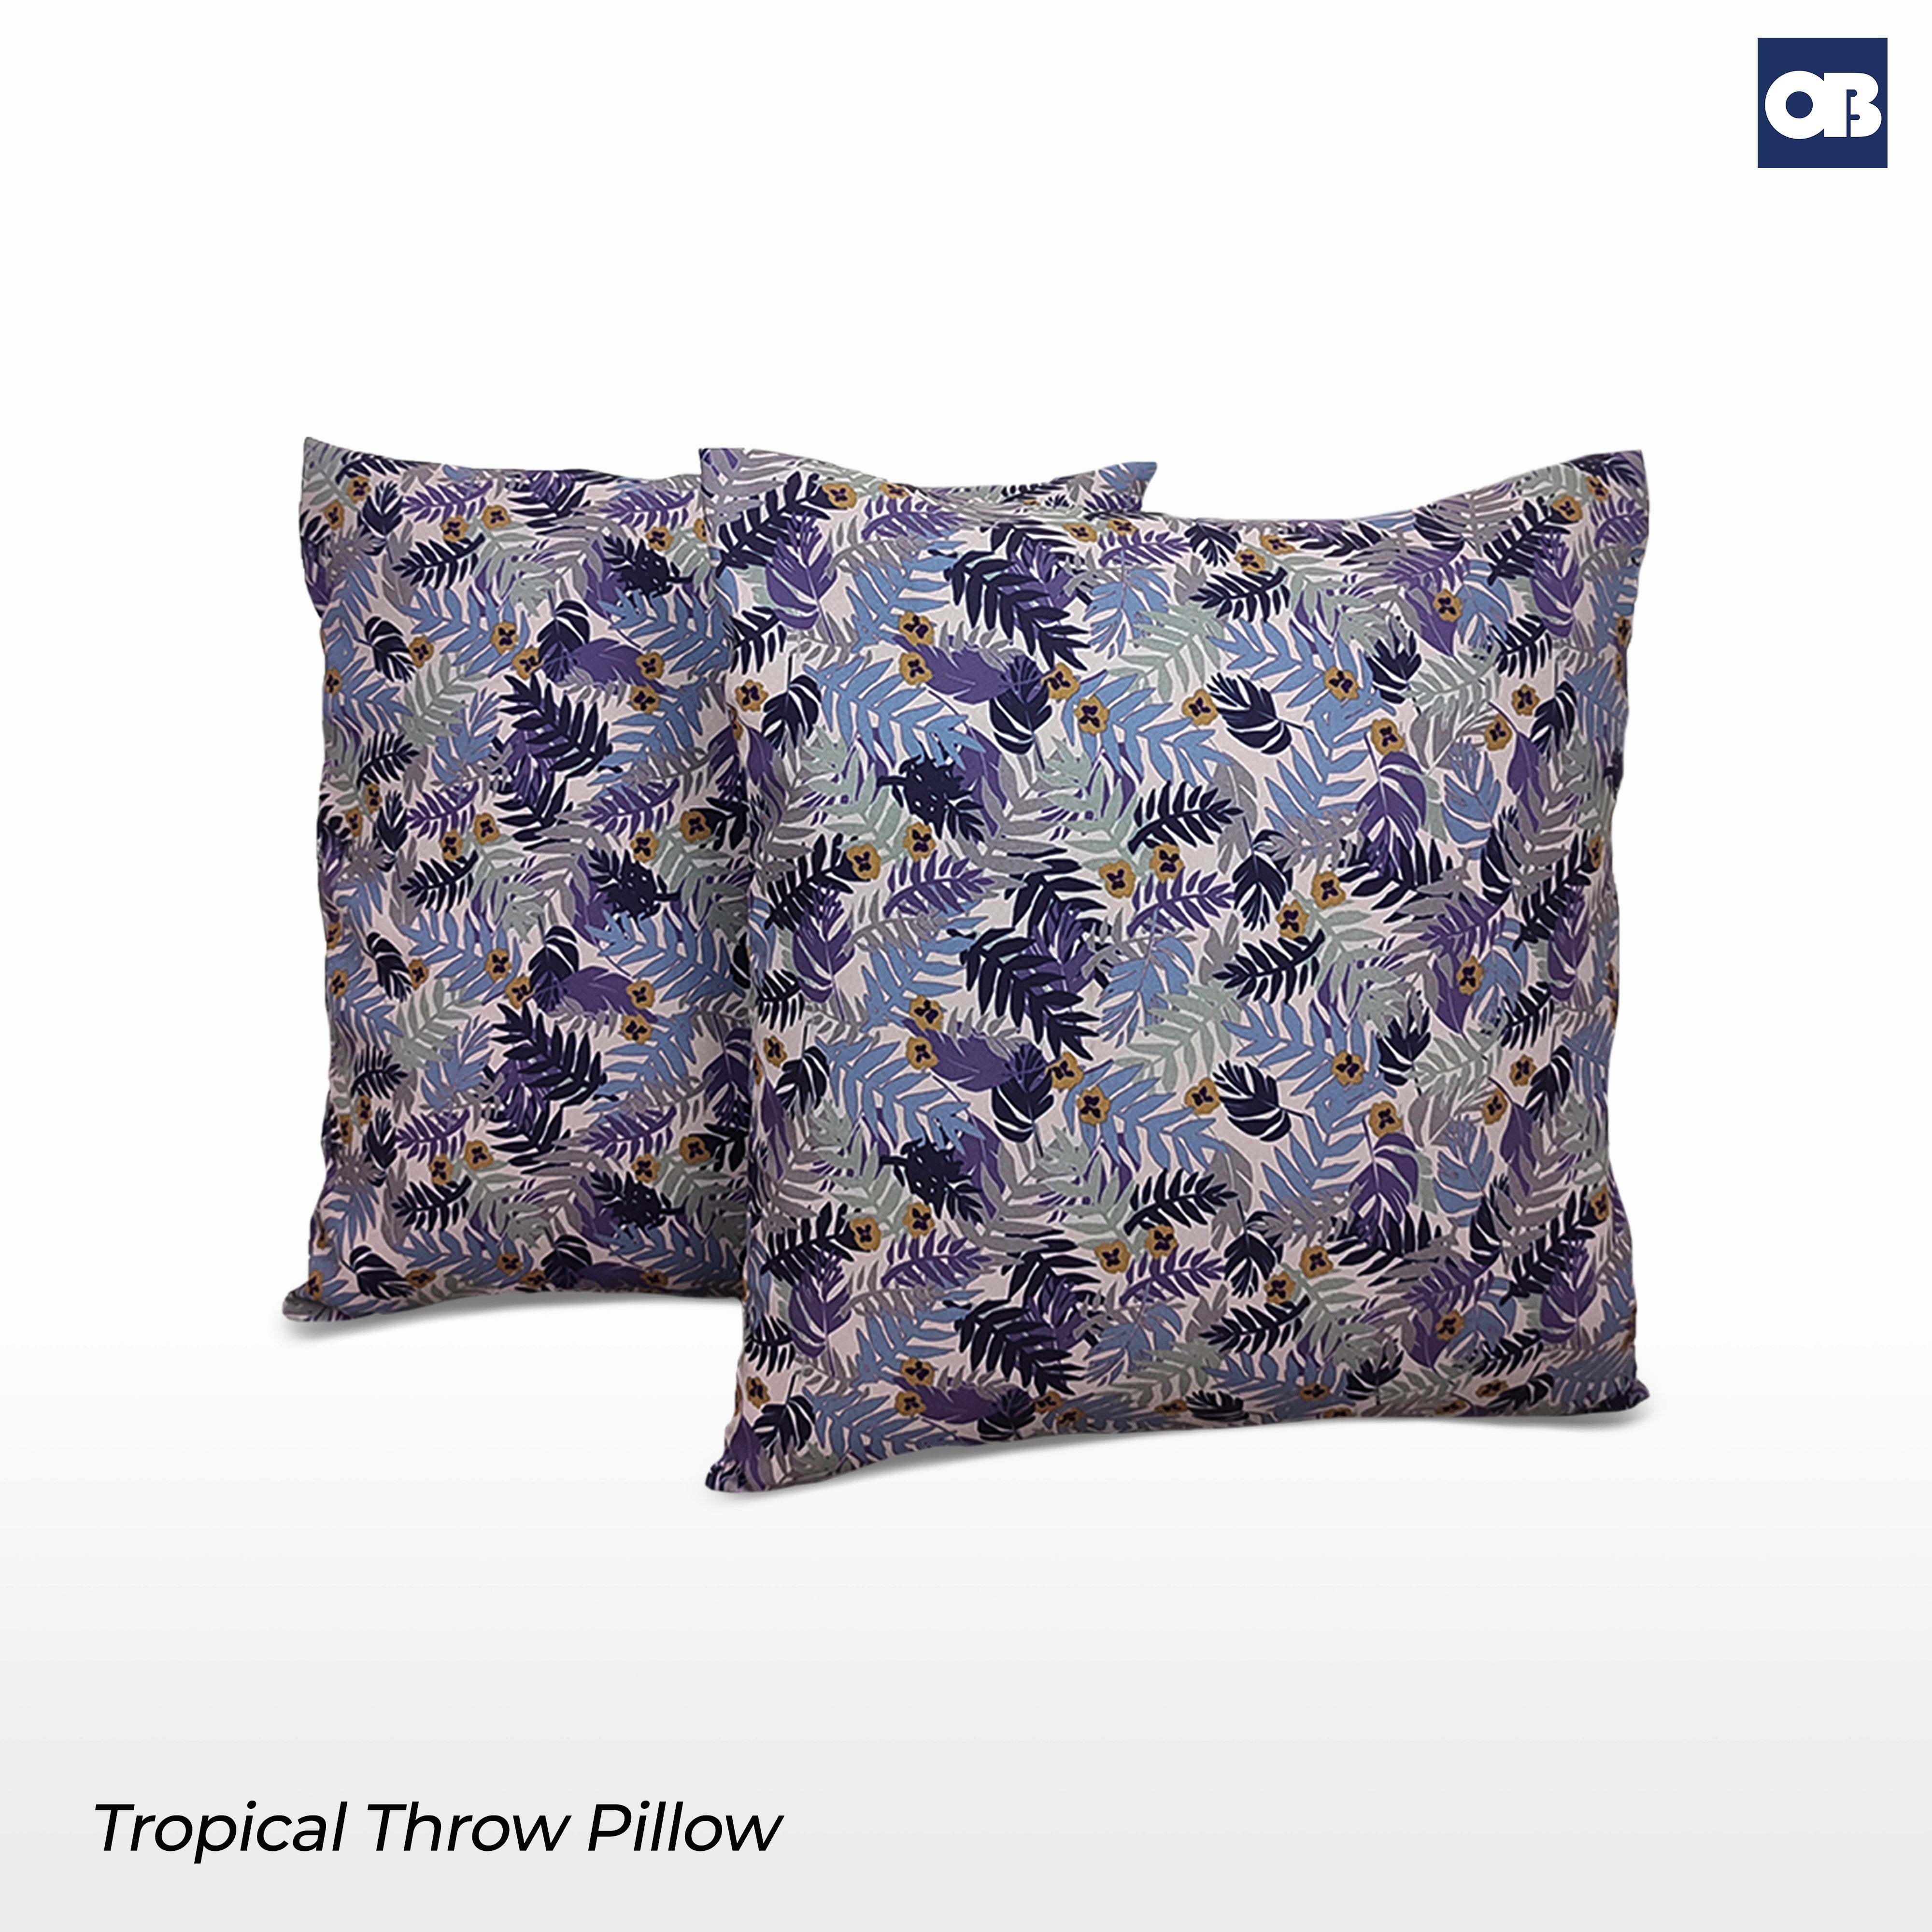 OB Tropical Throw Pillow